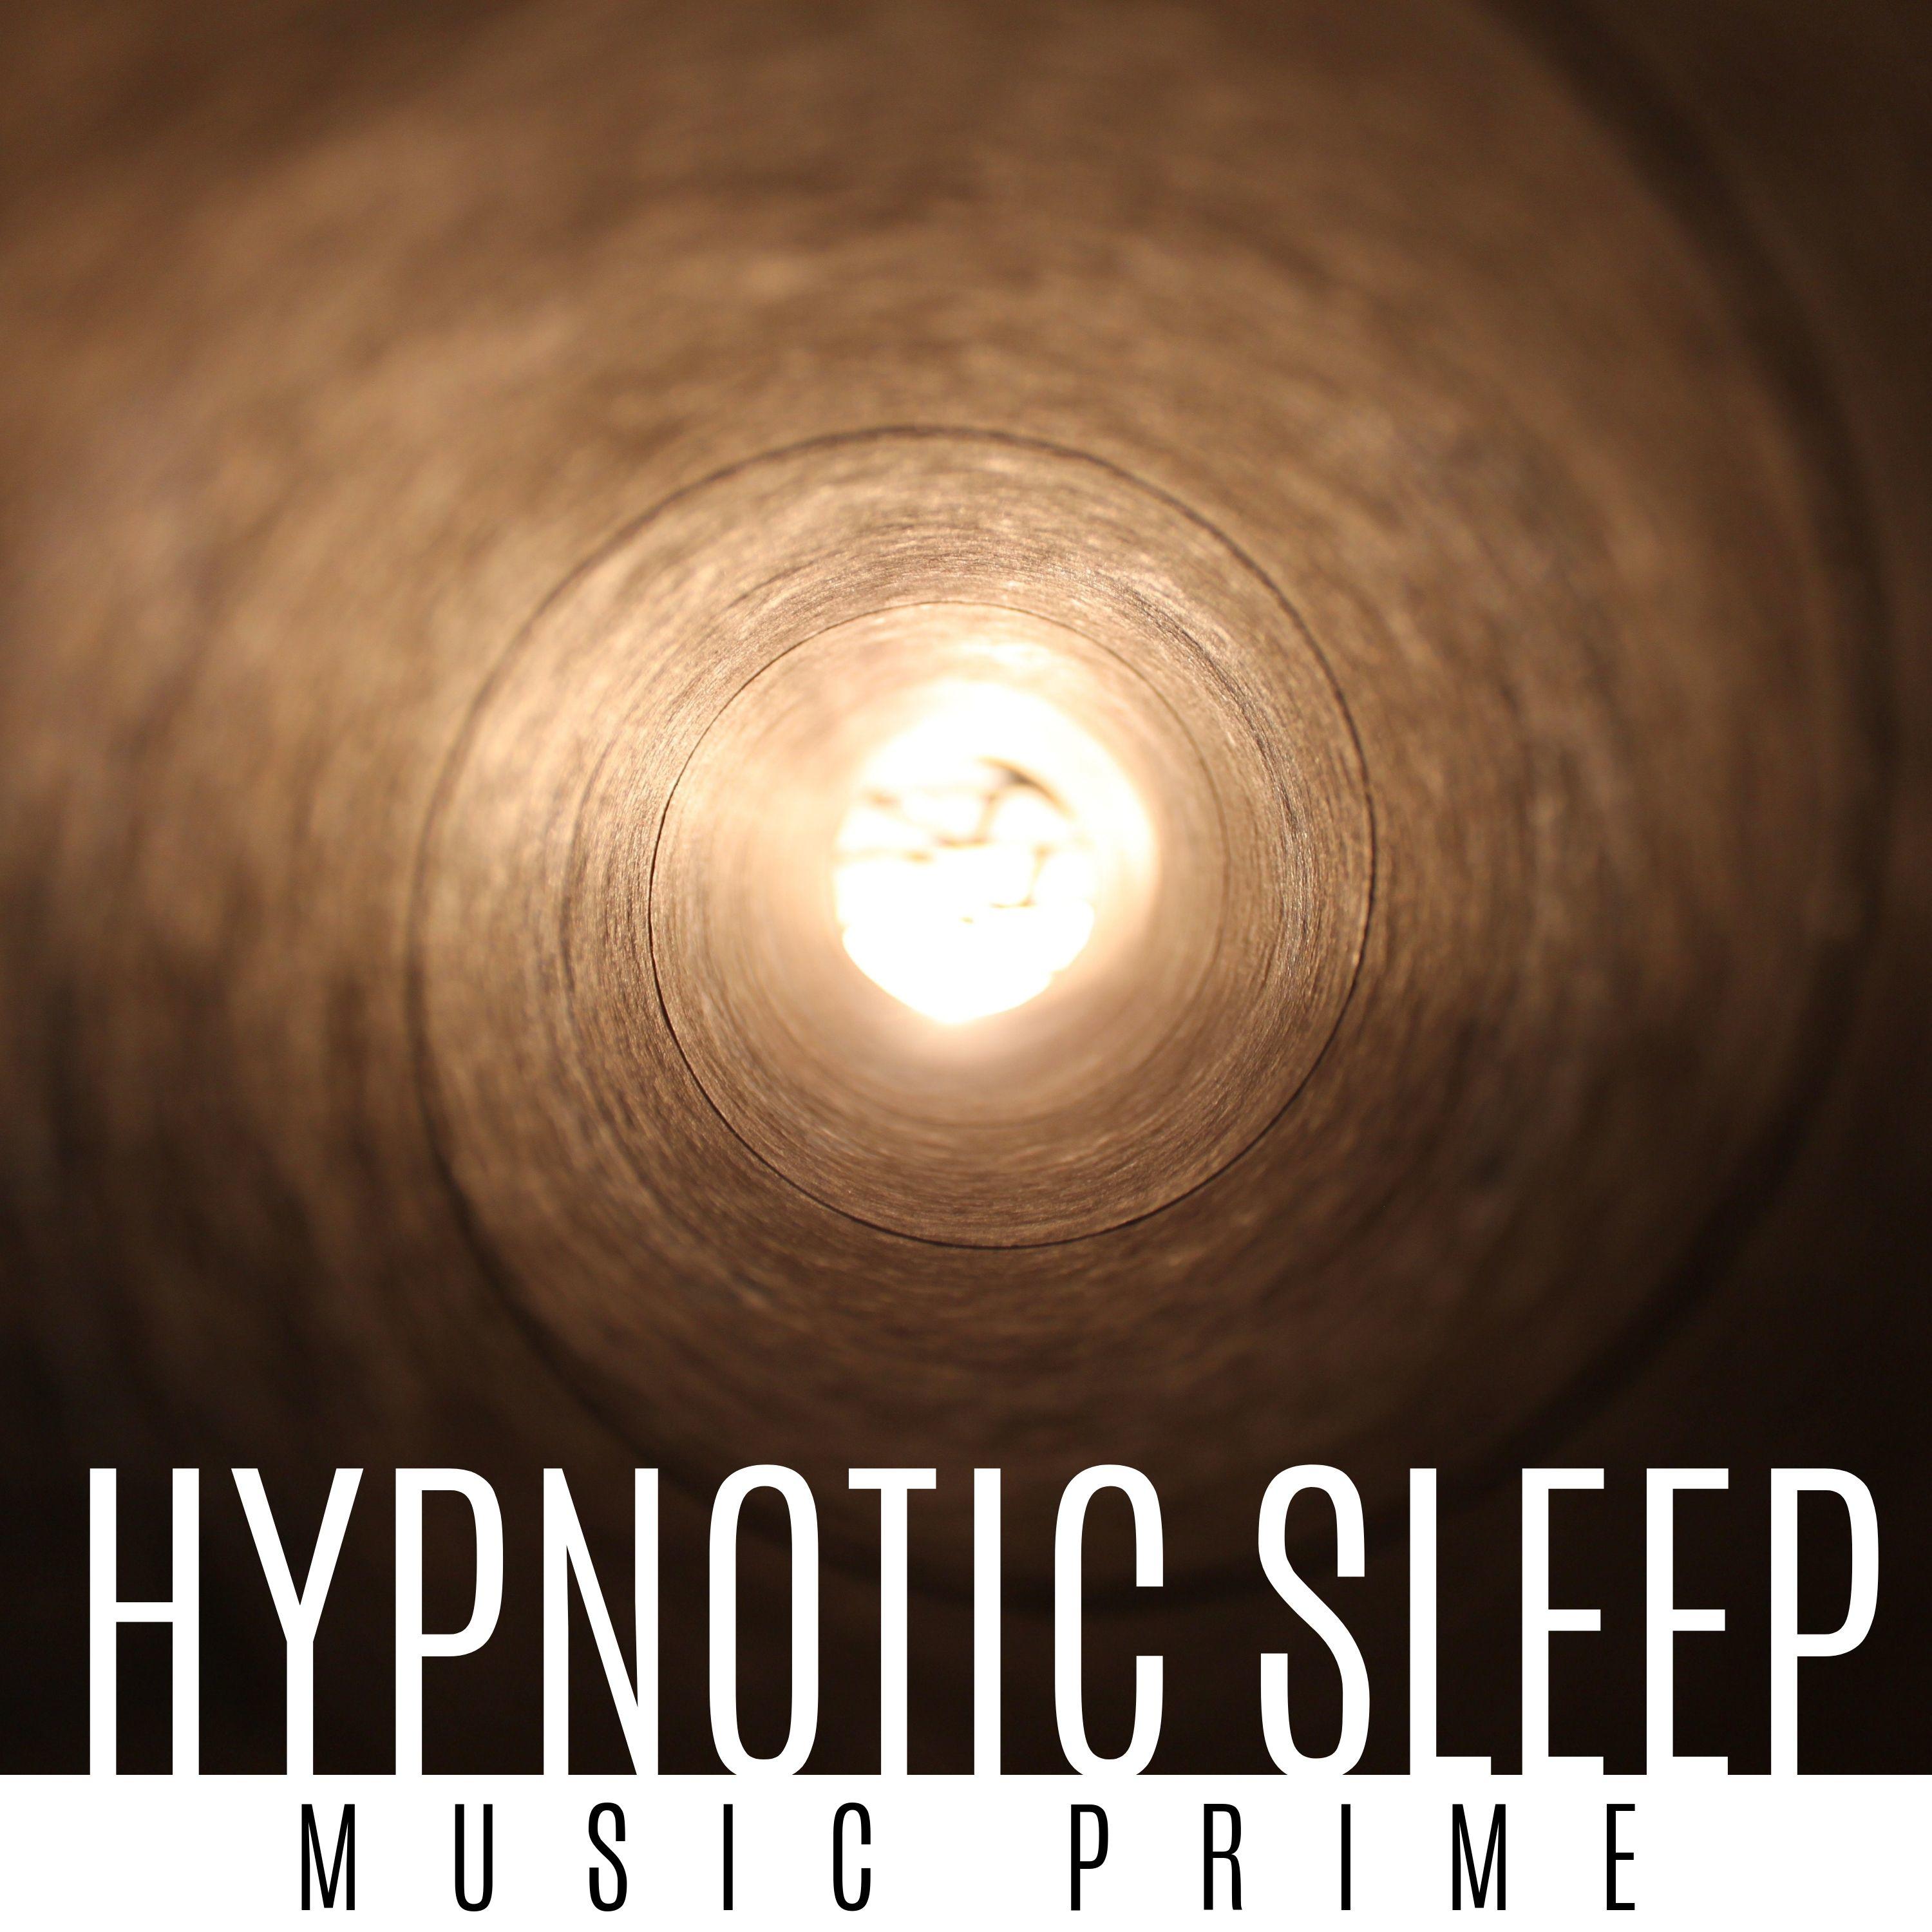 Hypnosis - Spiritual Growth